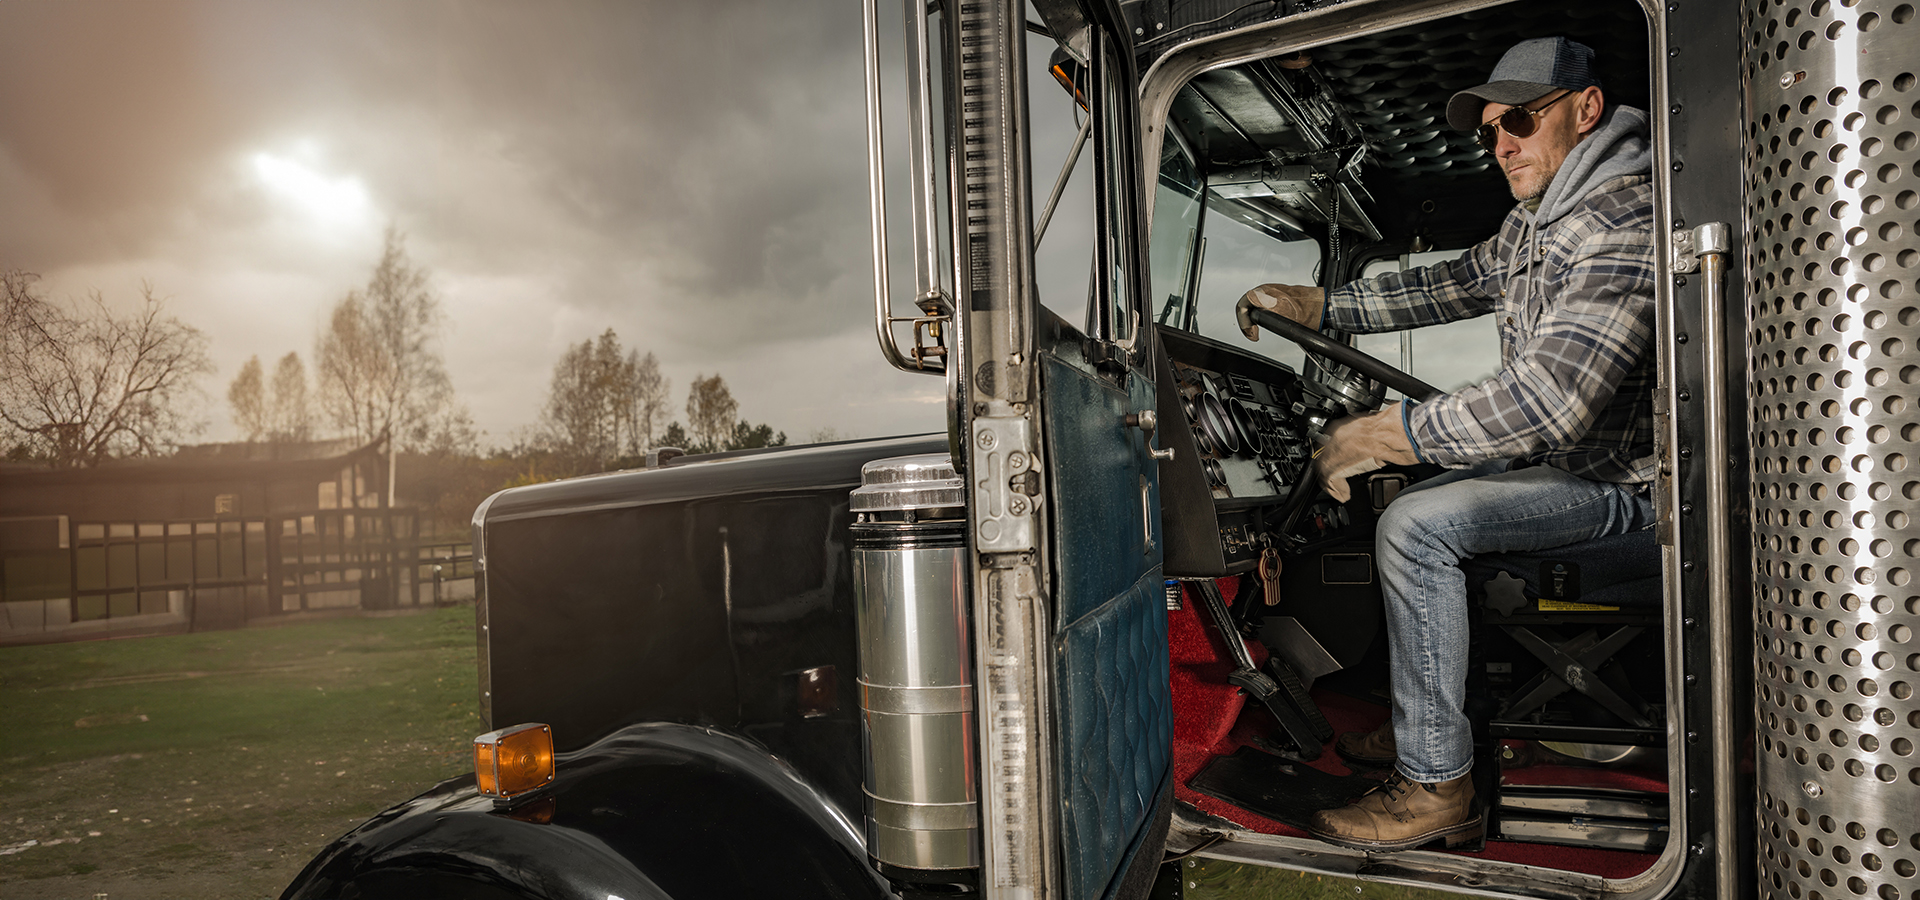 Caucasian Trucker in His 40s Inside American Semi Truck Tractor. Ground Cargo Theme.